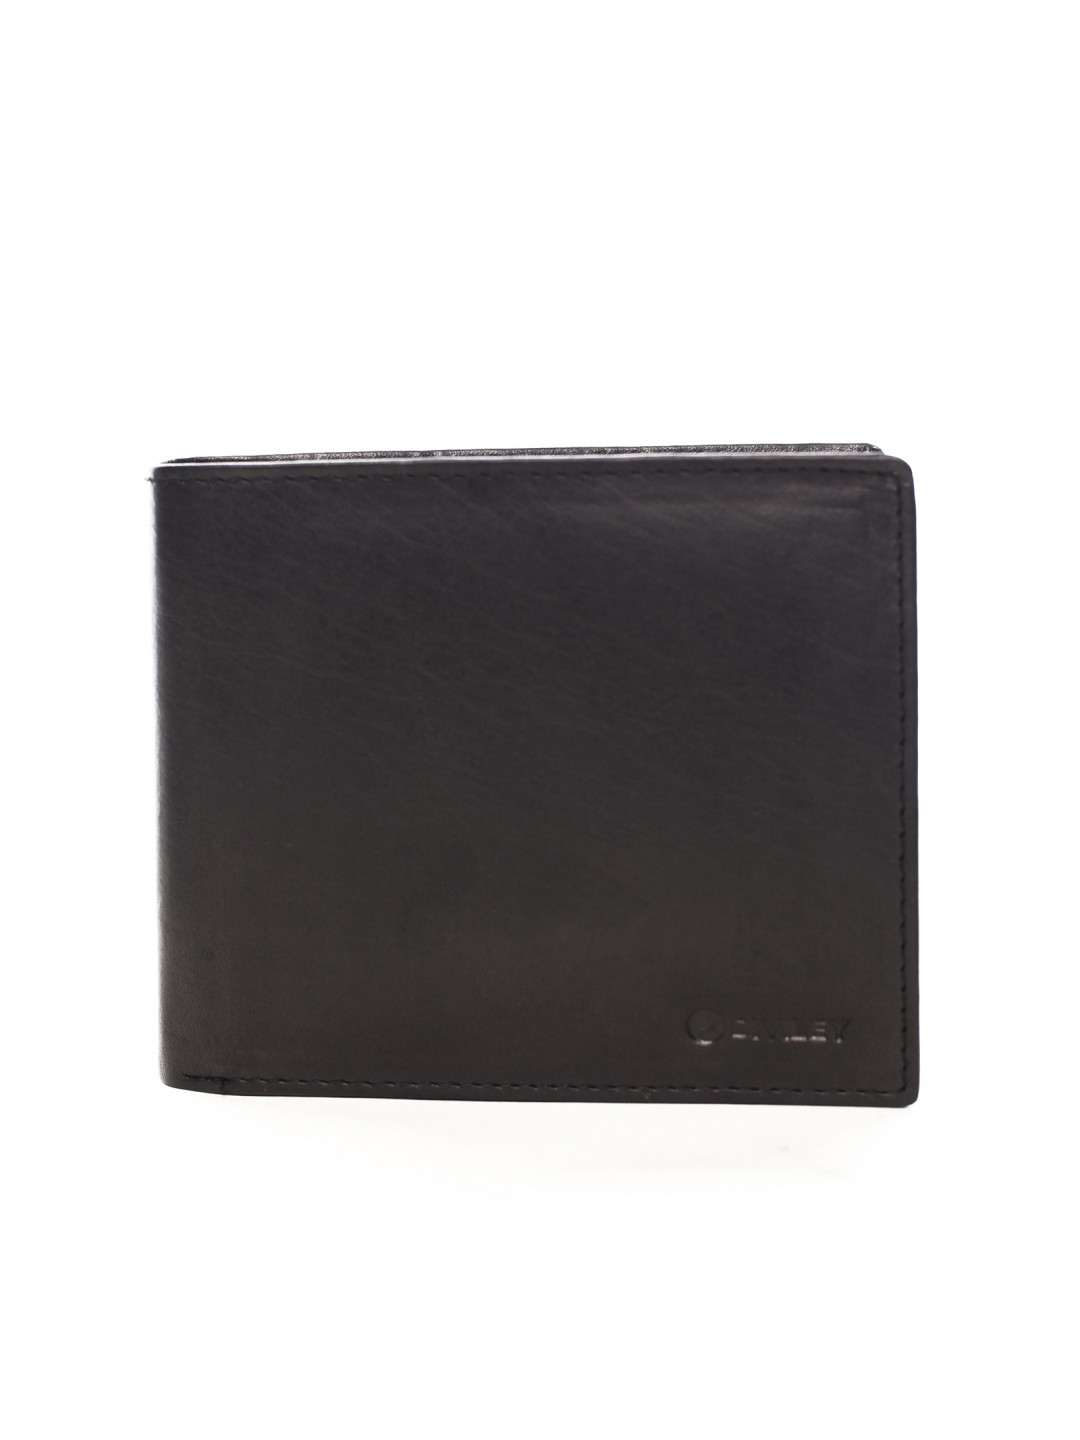 Pánská kožená peněženka černá – Diviley Anton